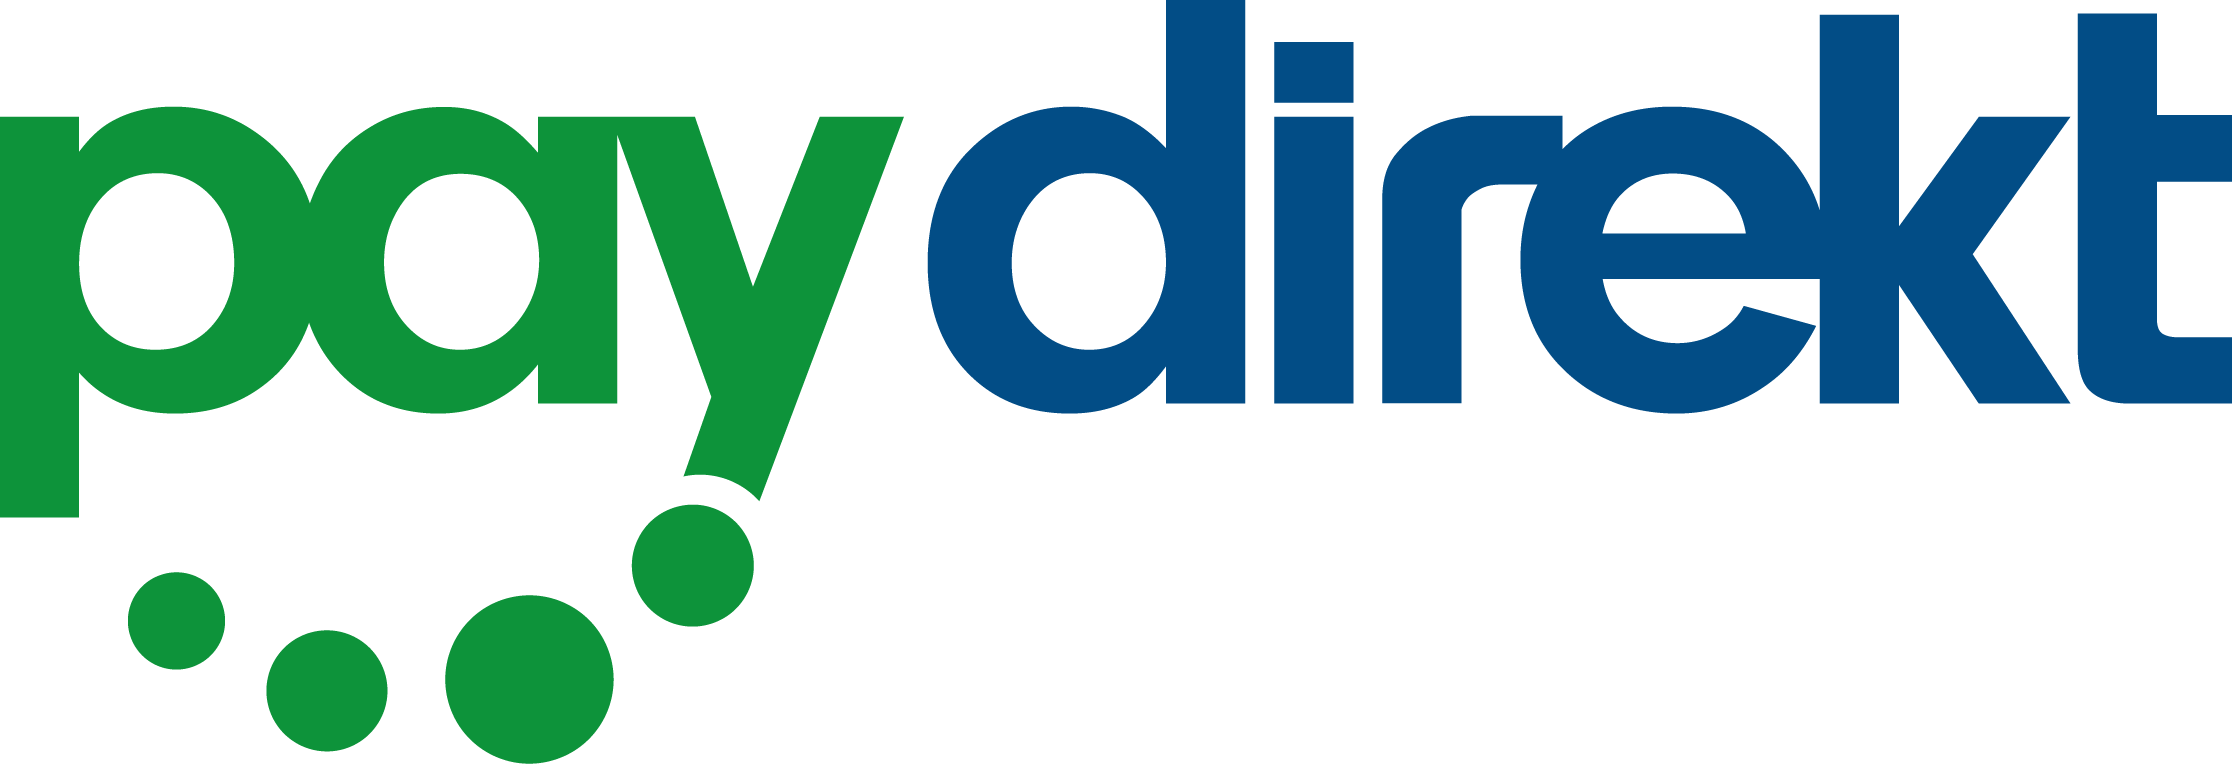 paydirekt - Online Bezahlsystem - Logo